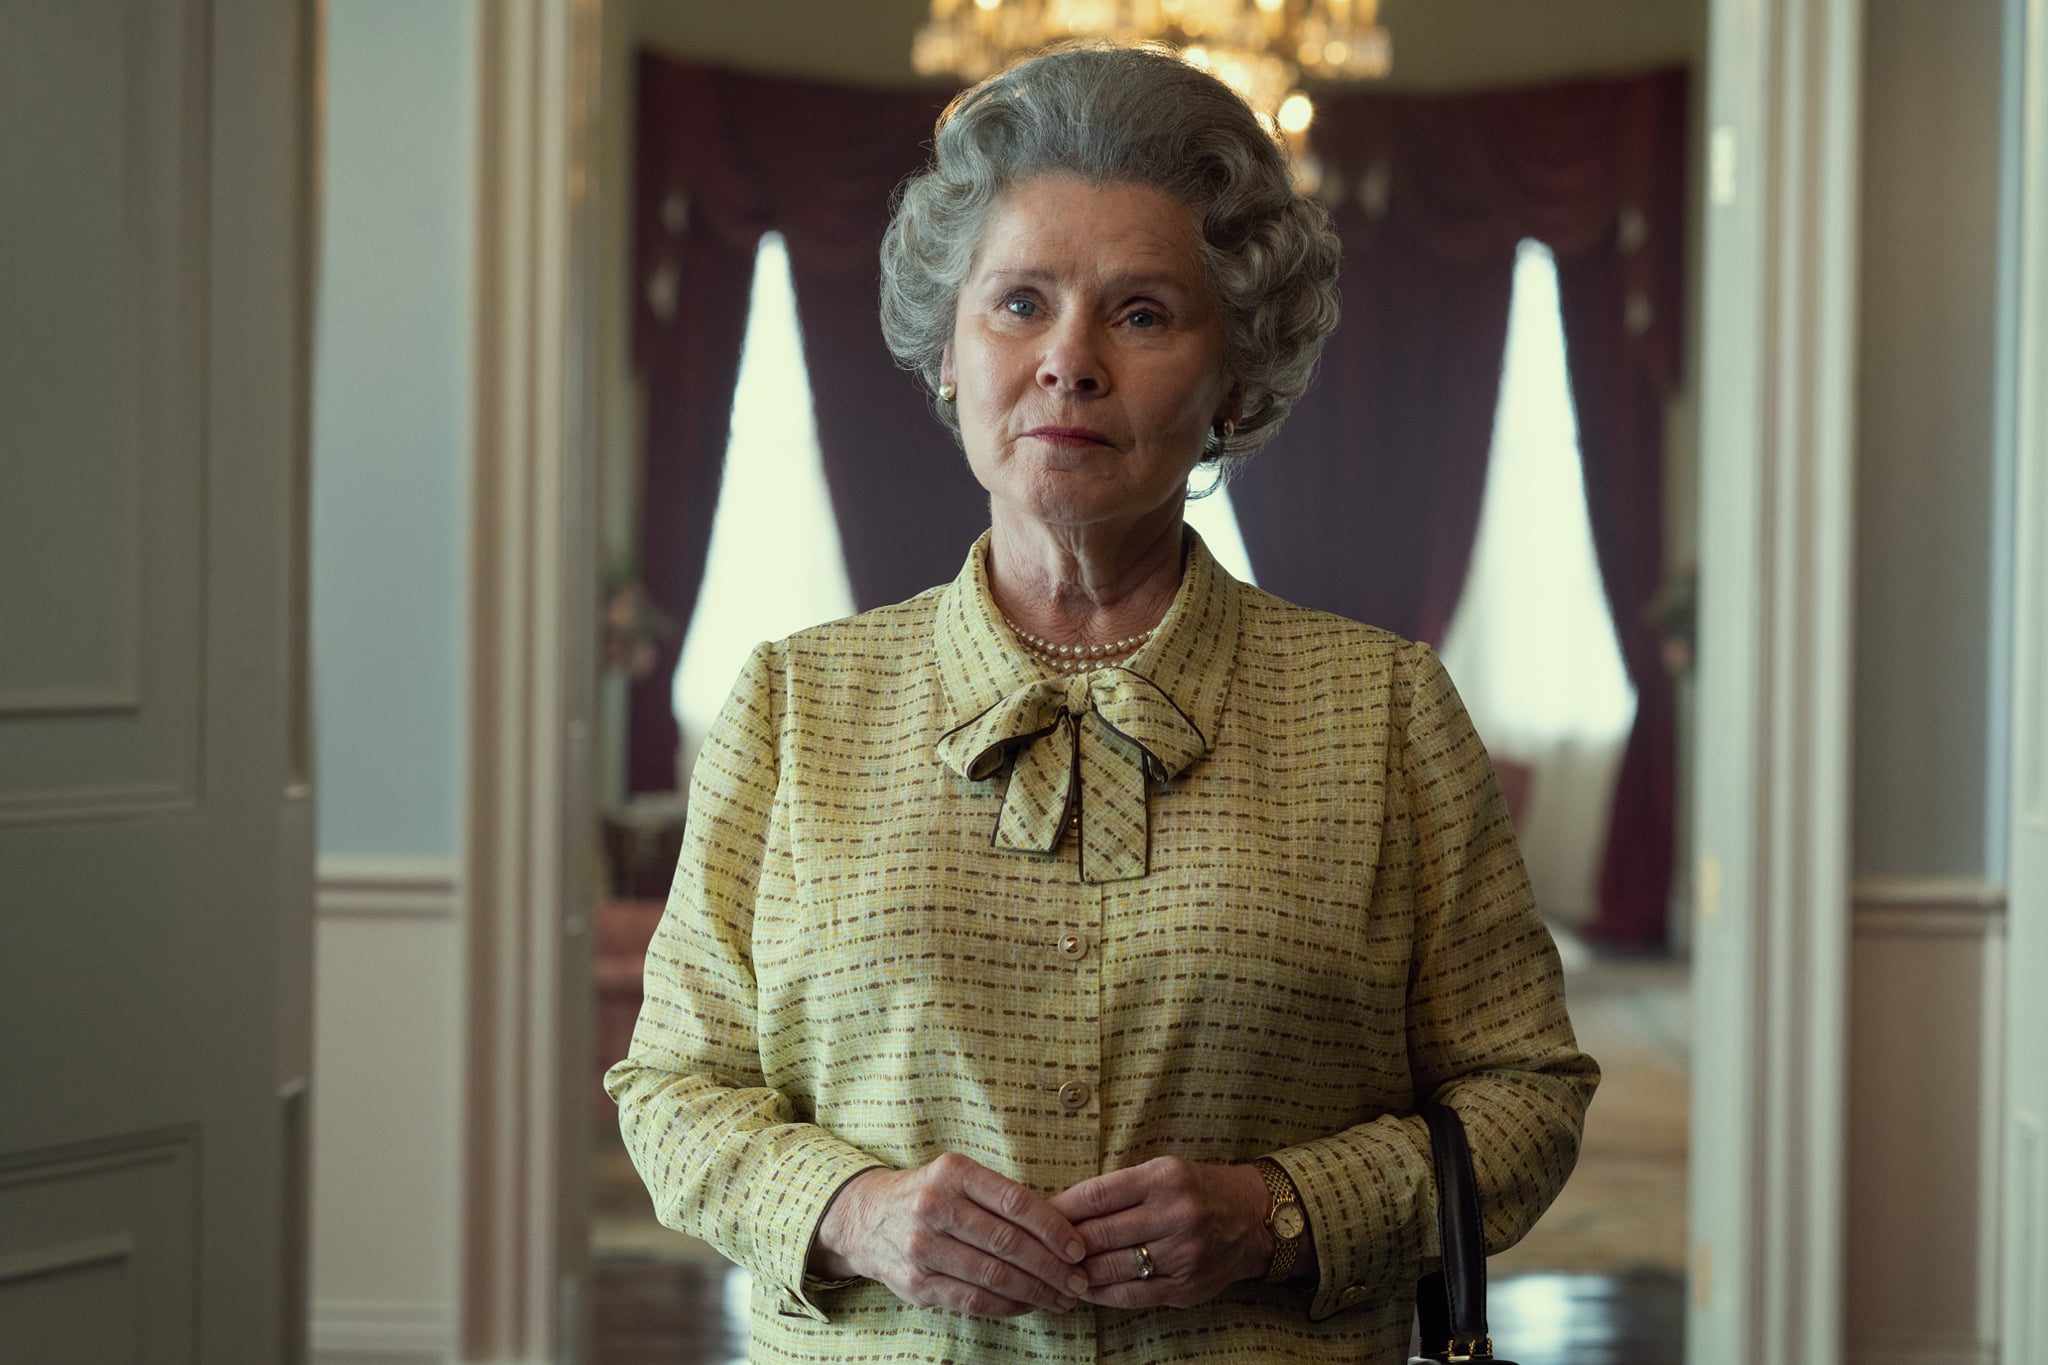 LOOK: Imelda Staunton is Queen Elizabeth II in new season of ‘The Crown’